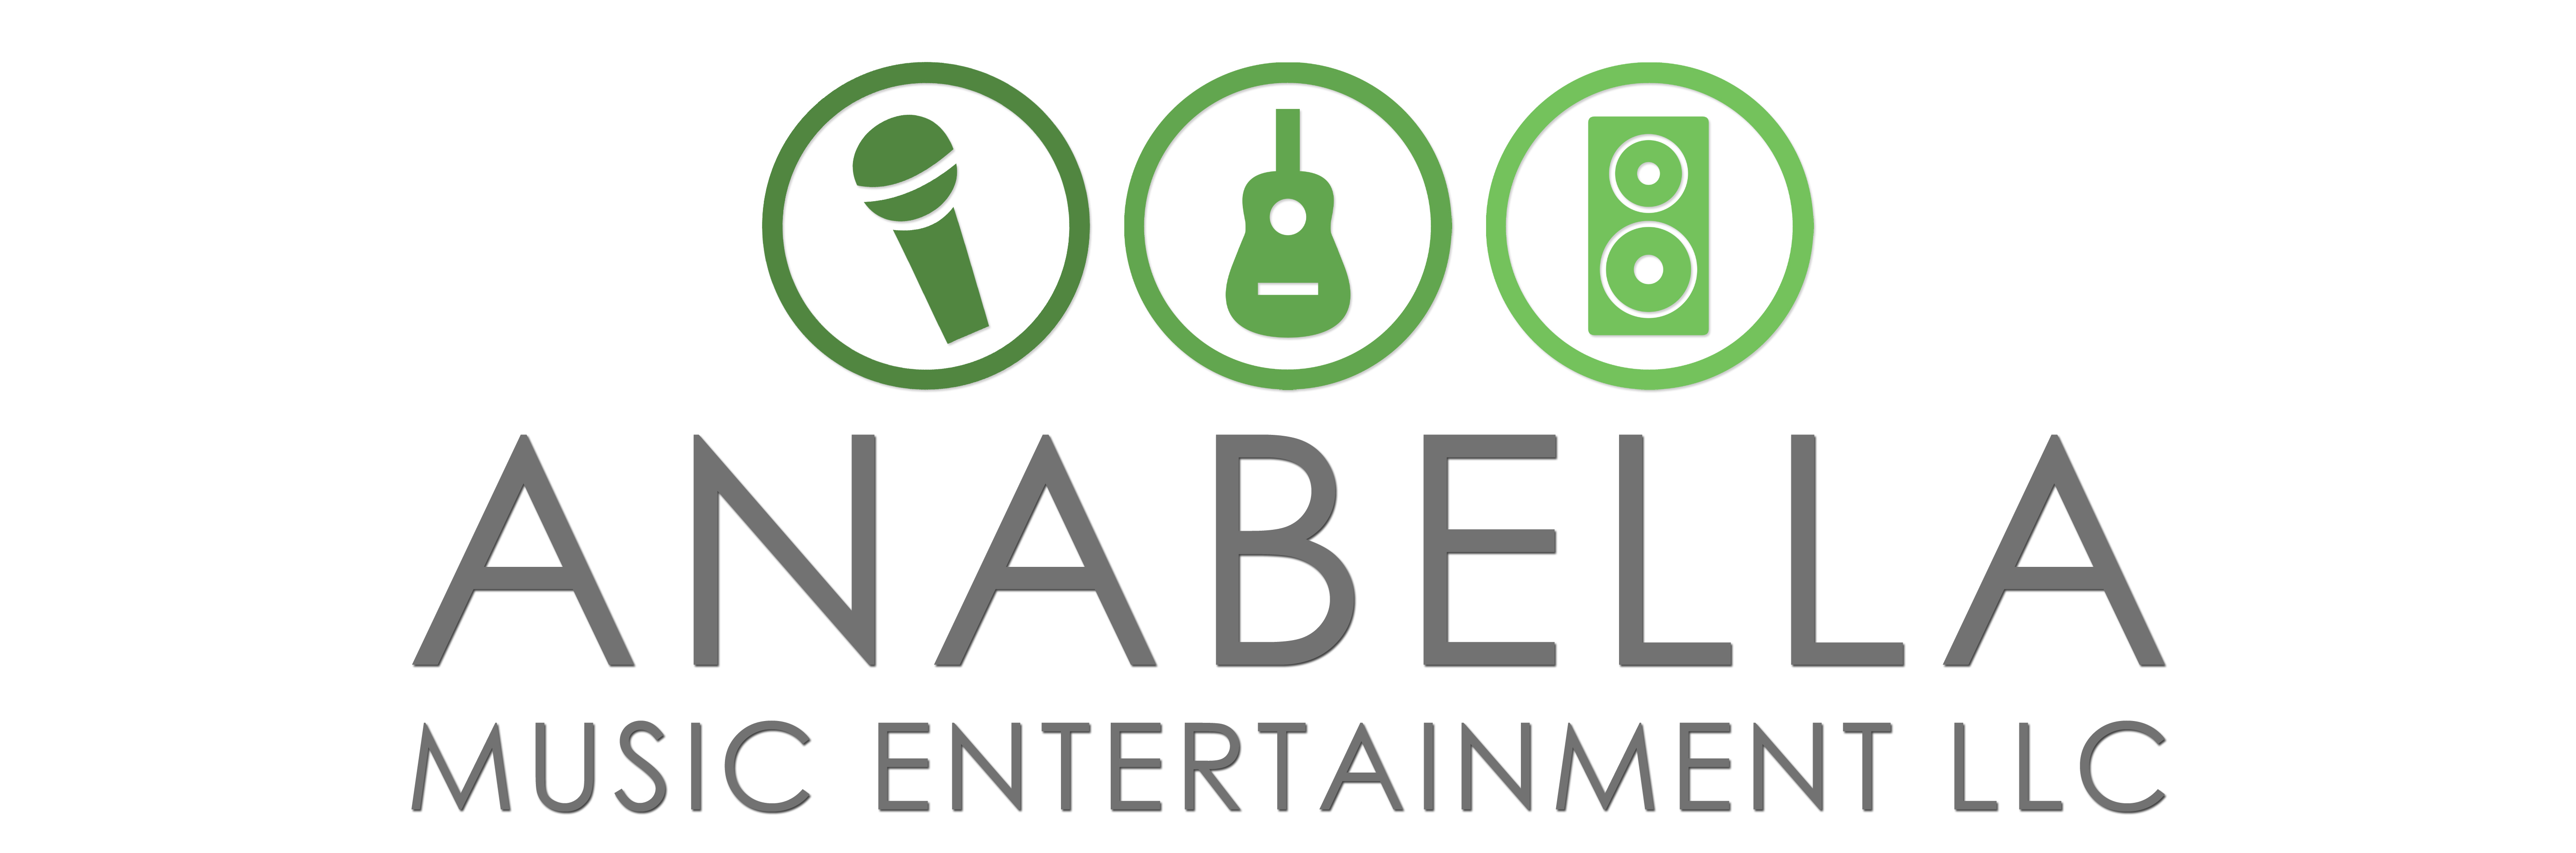 ANABELLA MUSIC ENTERTAINMENT LLC